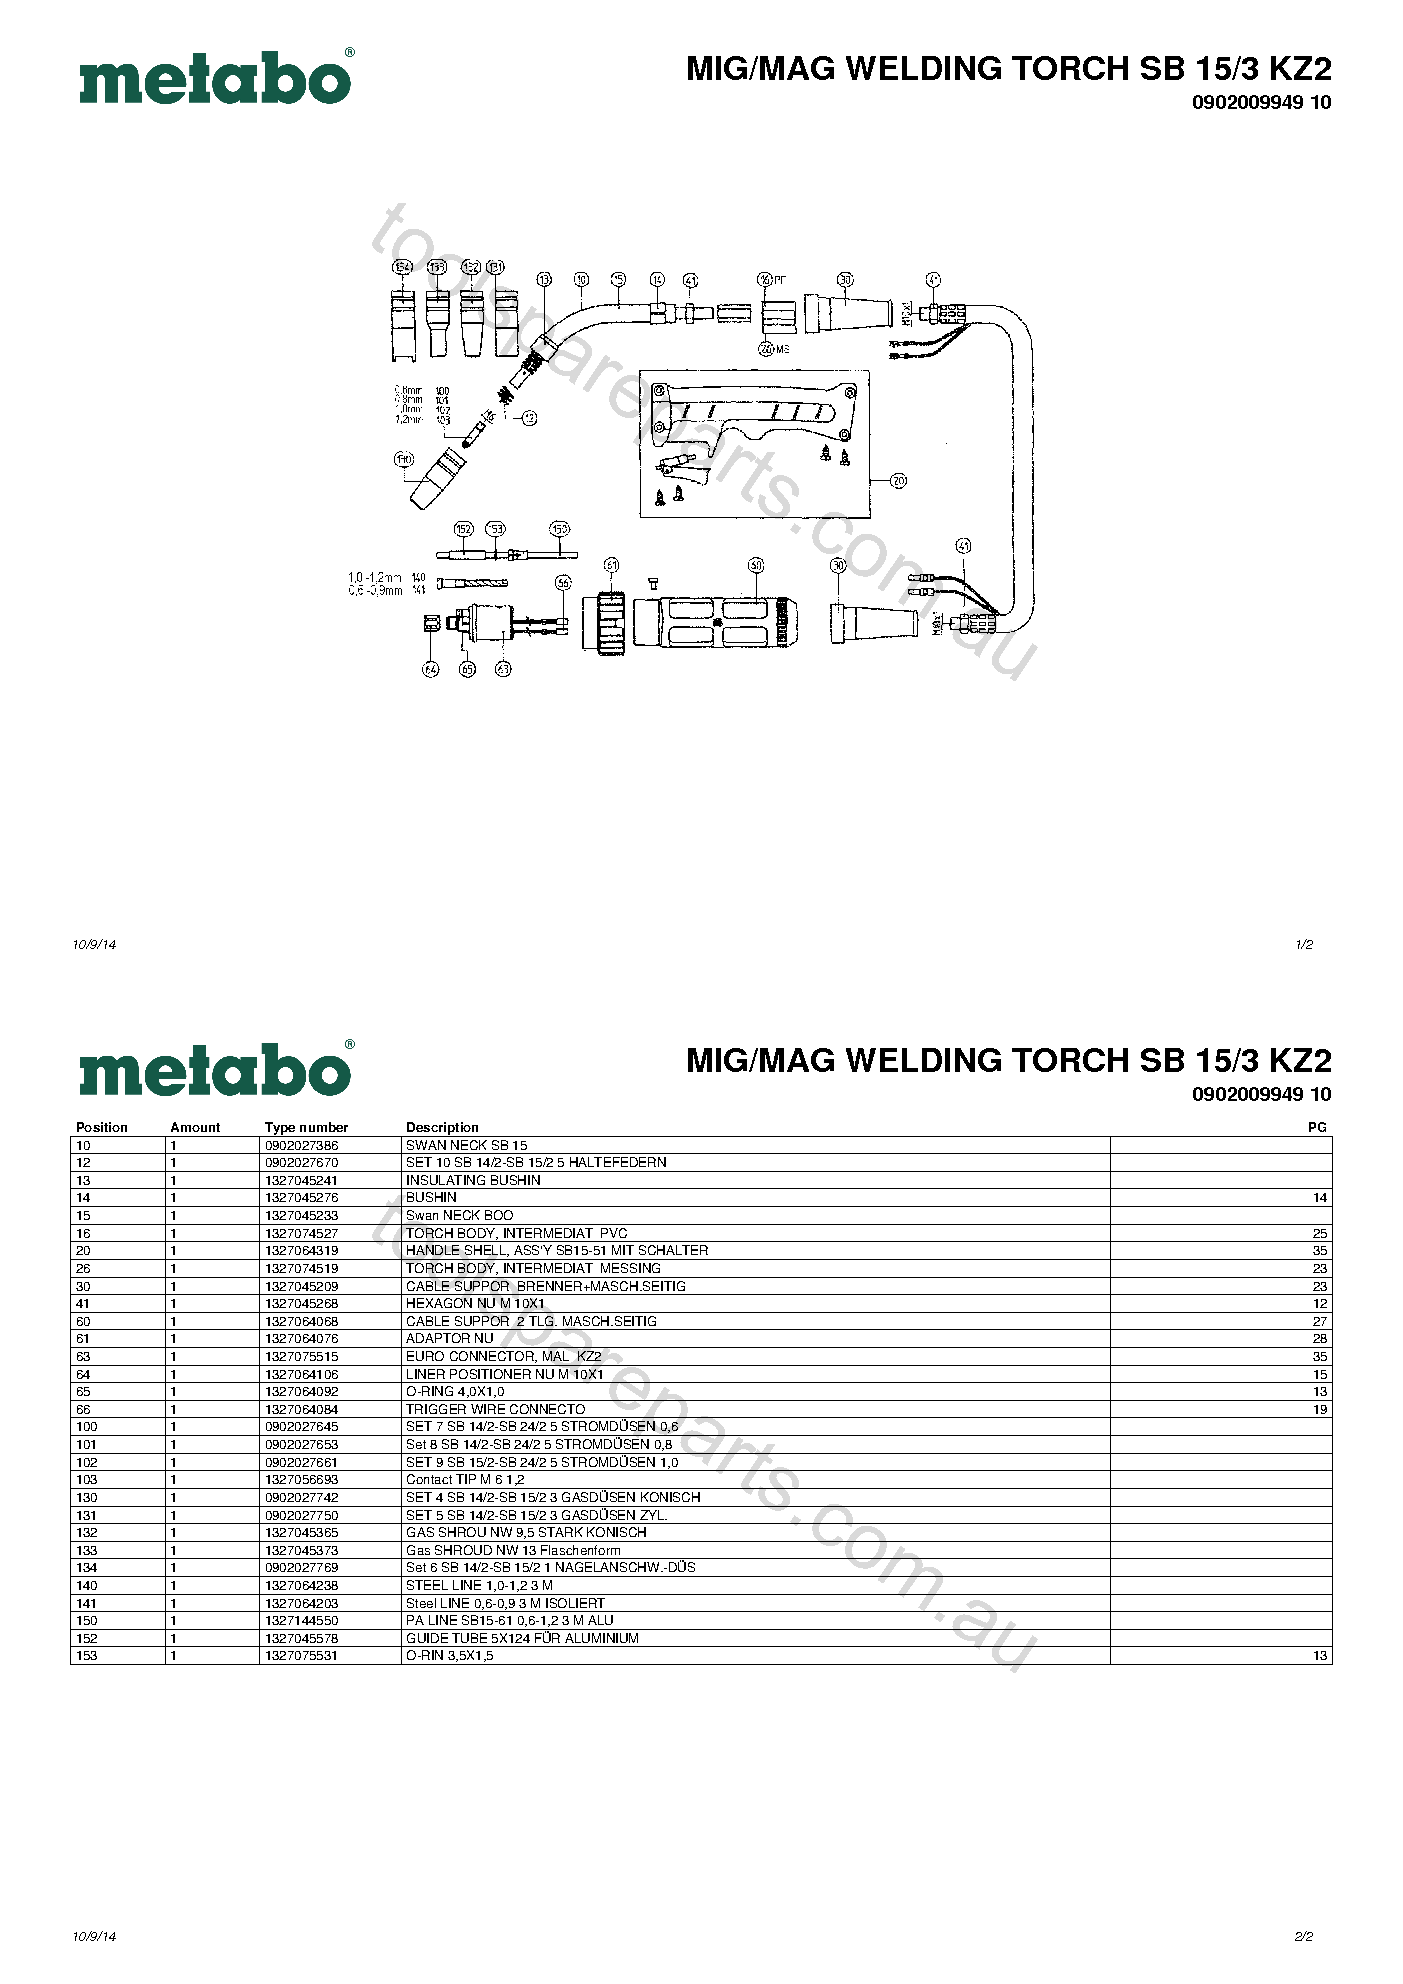 Metabo MIG/MAG WELDING TORCH SB 15/3 KZ2 0902009949 10  Diagram 1